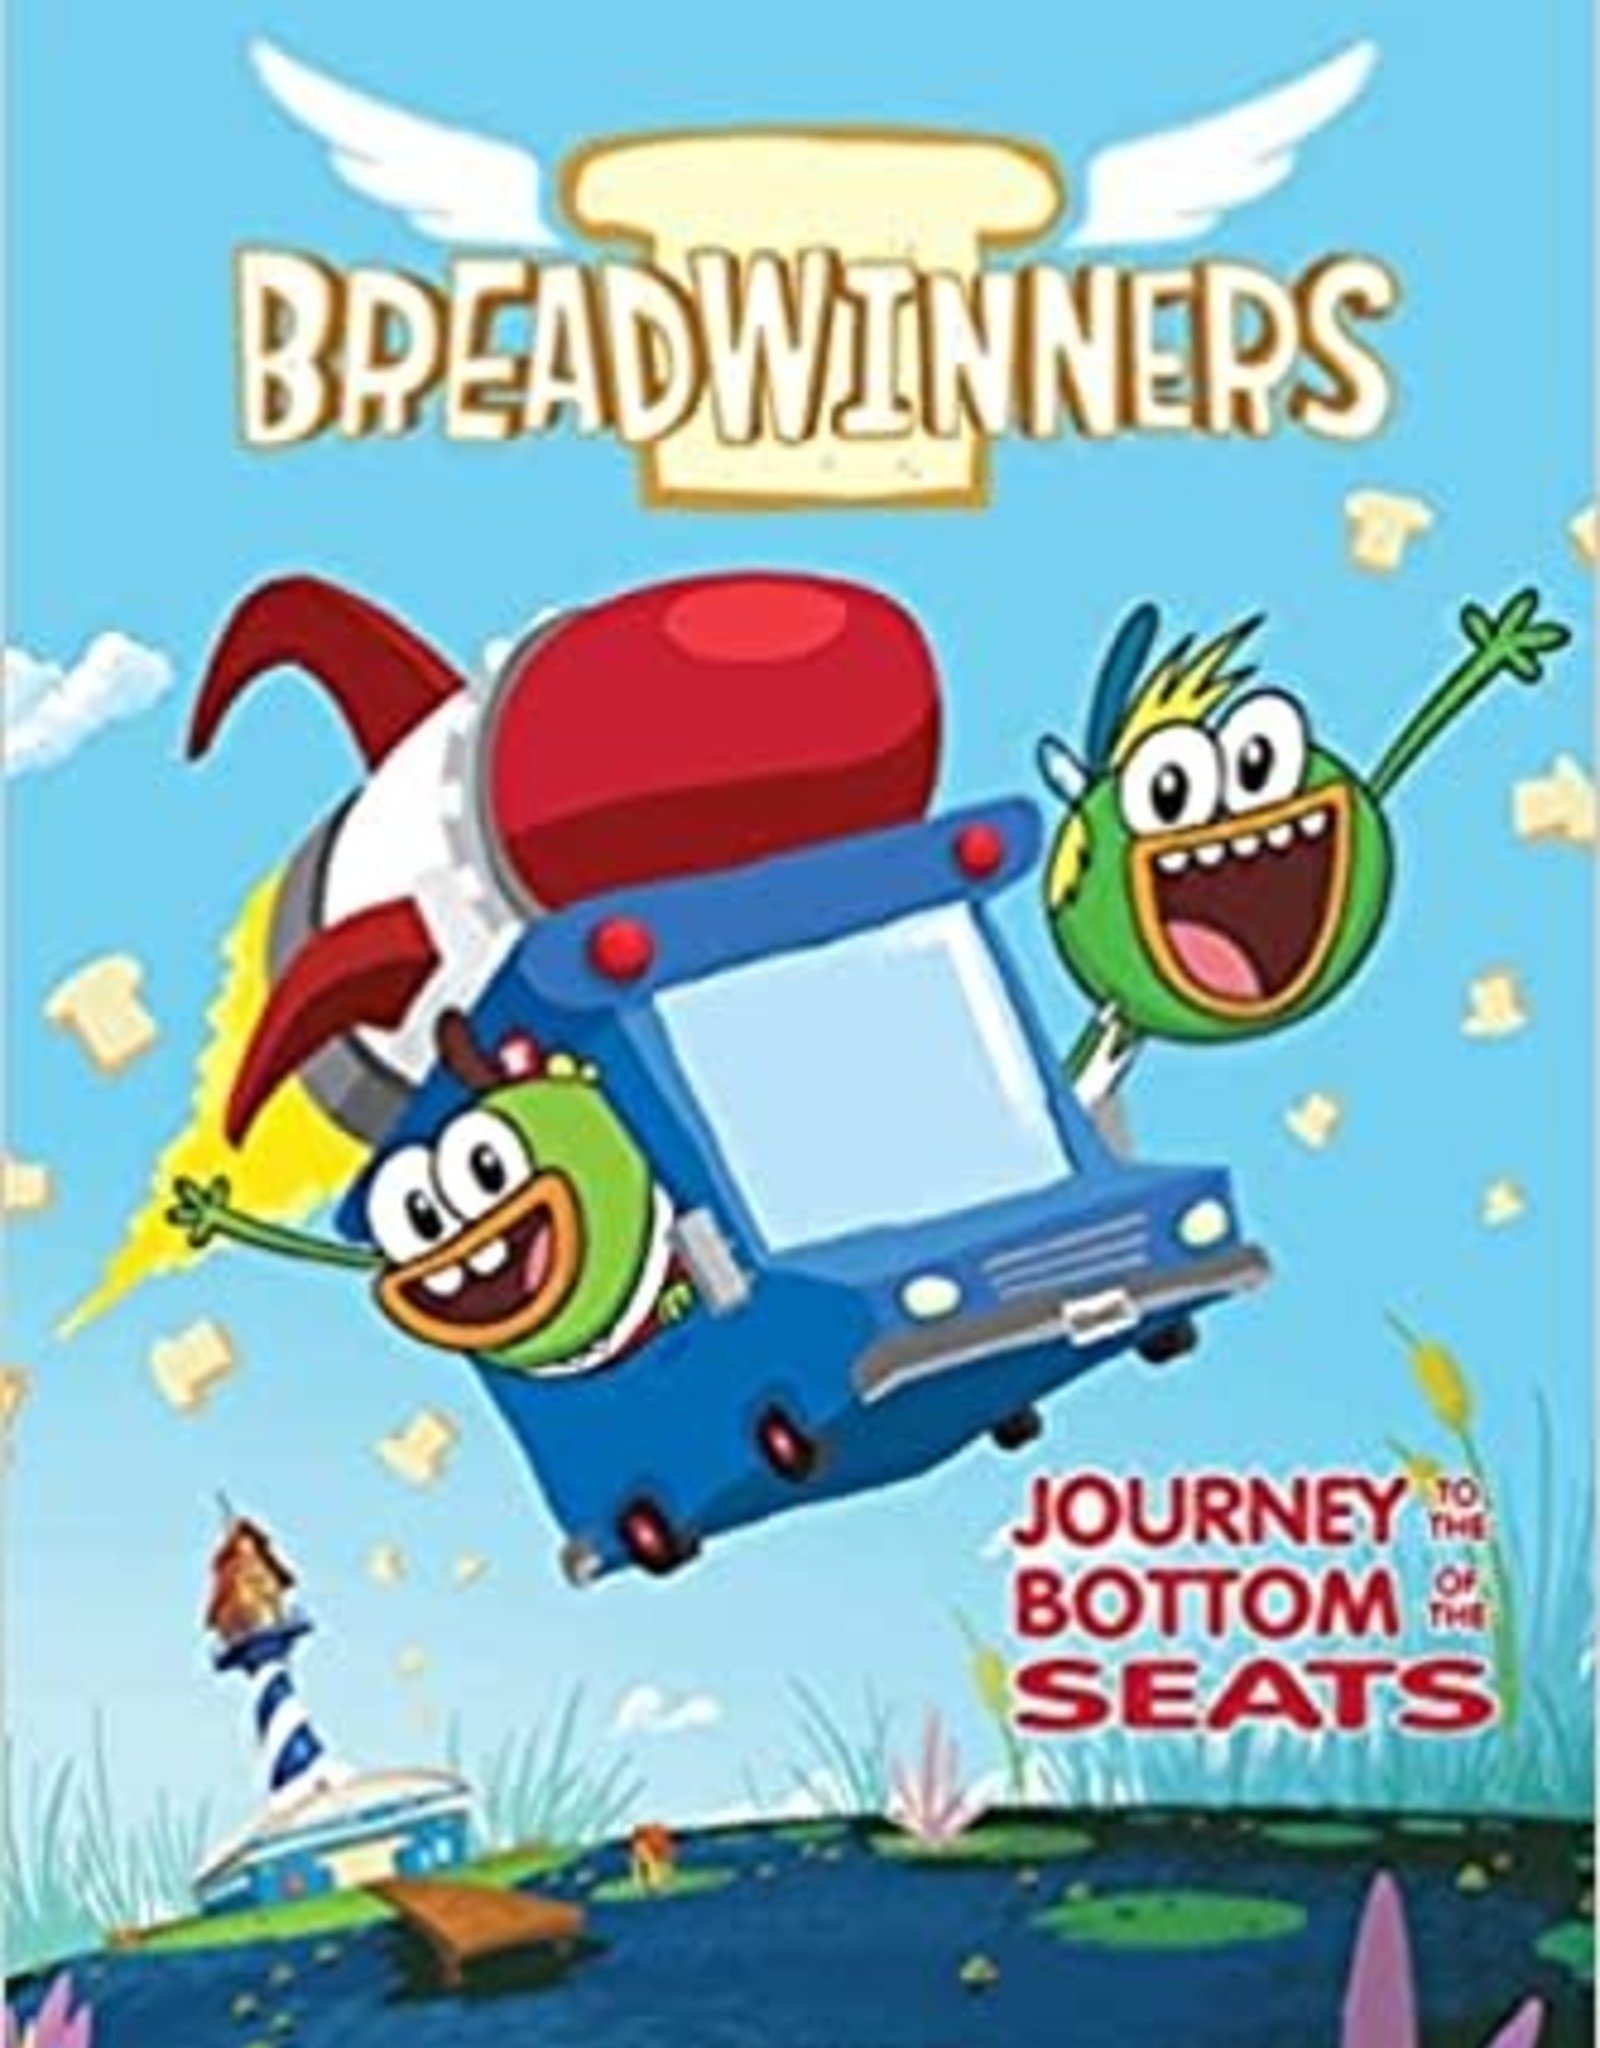 Nickelodeon: Breadwinners Journey to the Bottom of the Seats